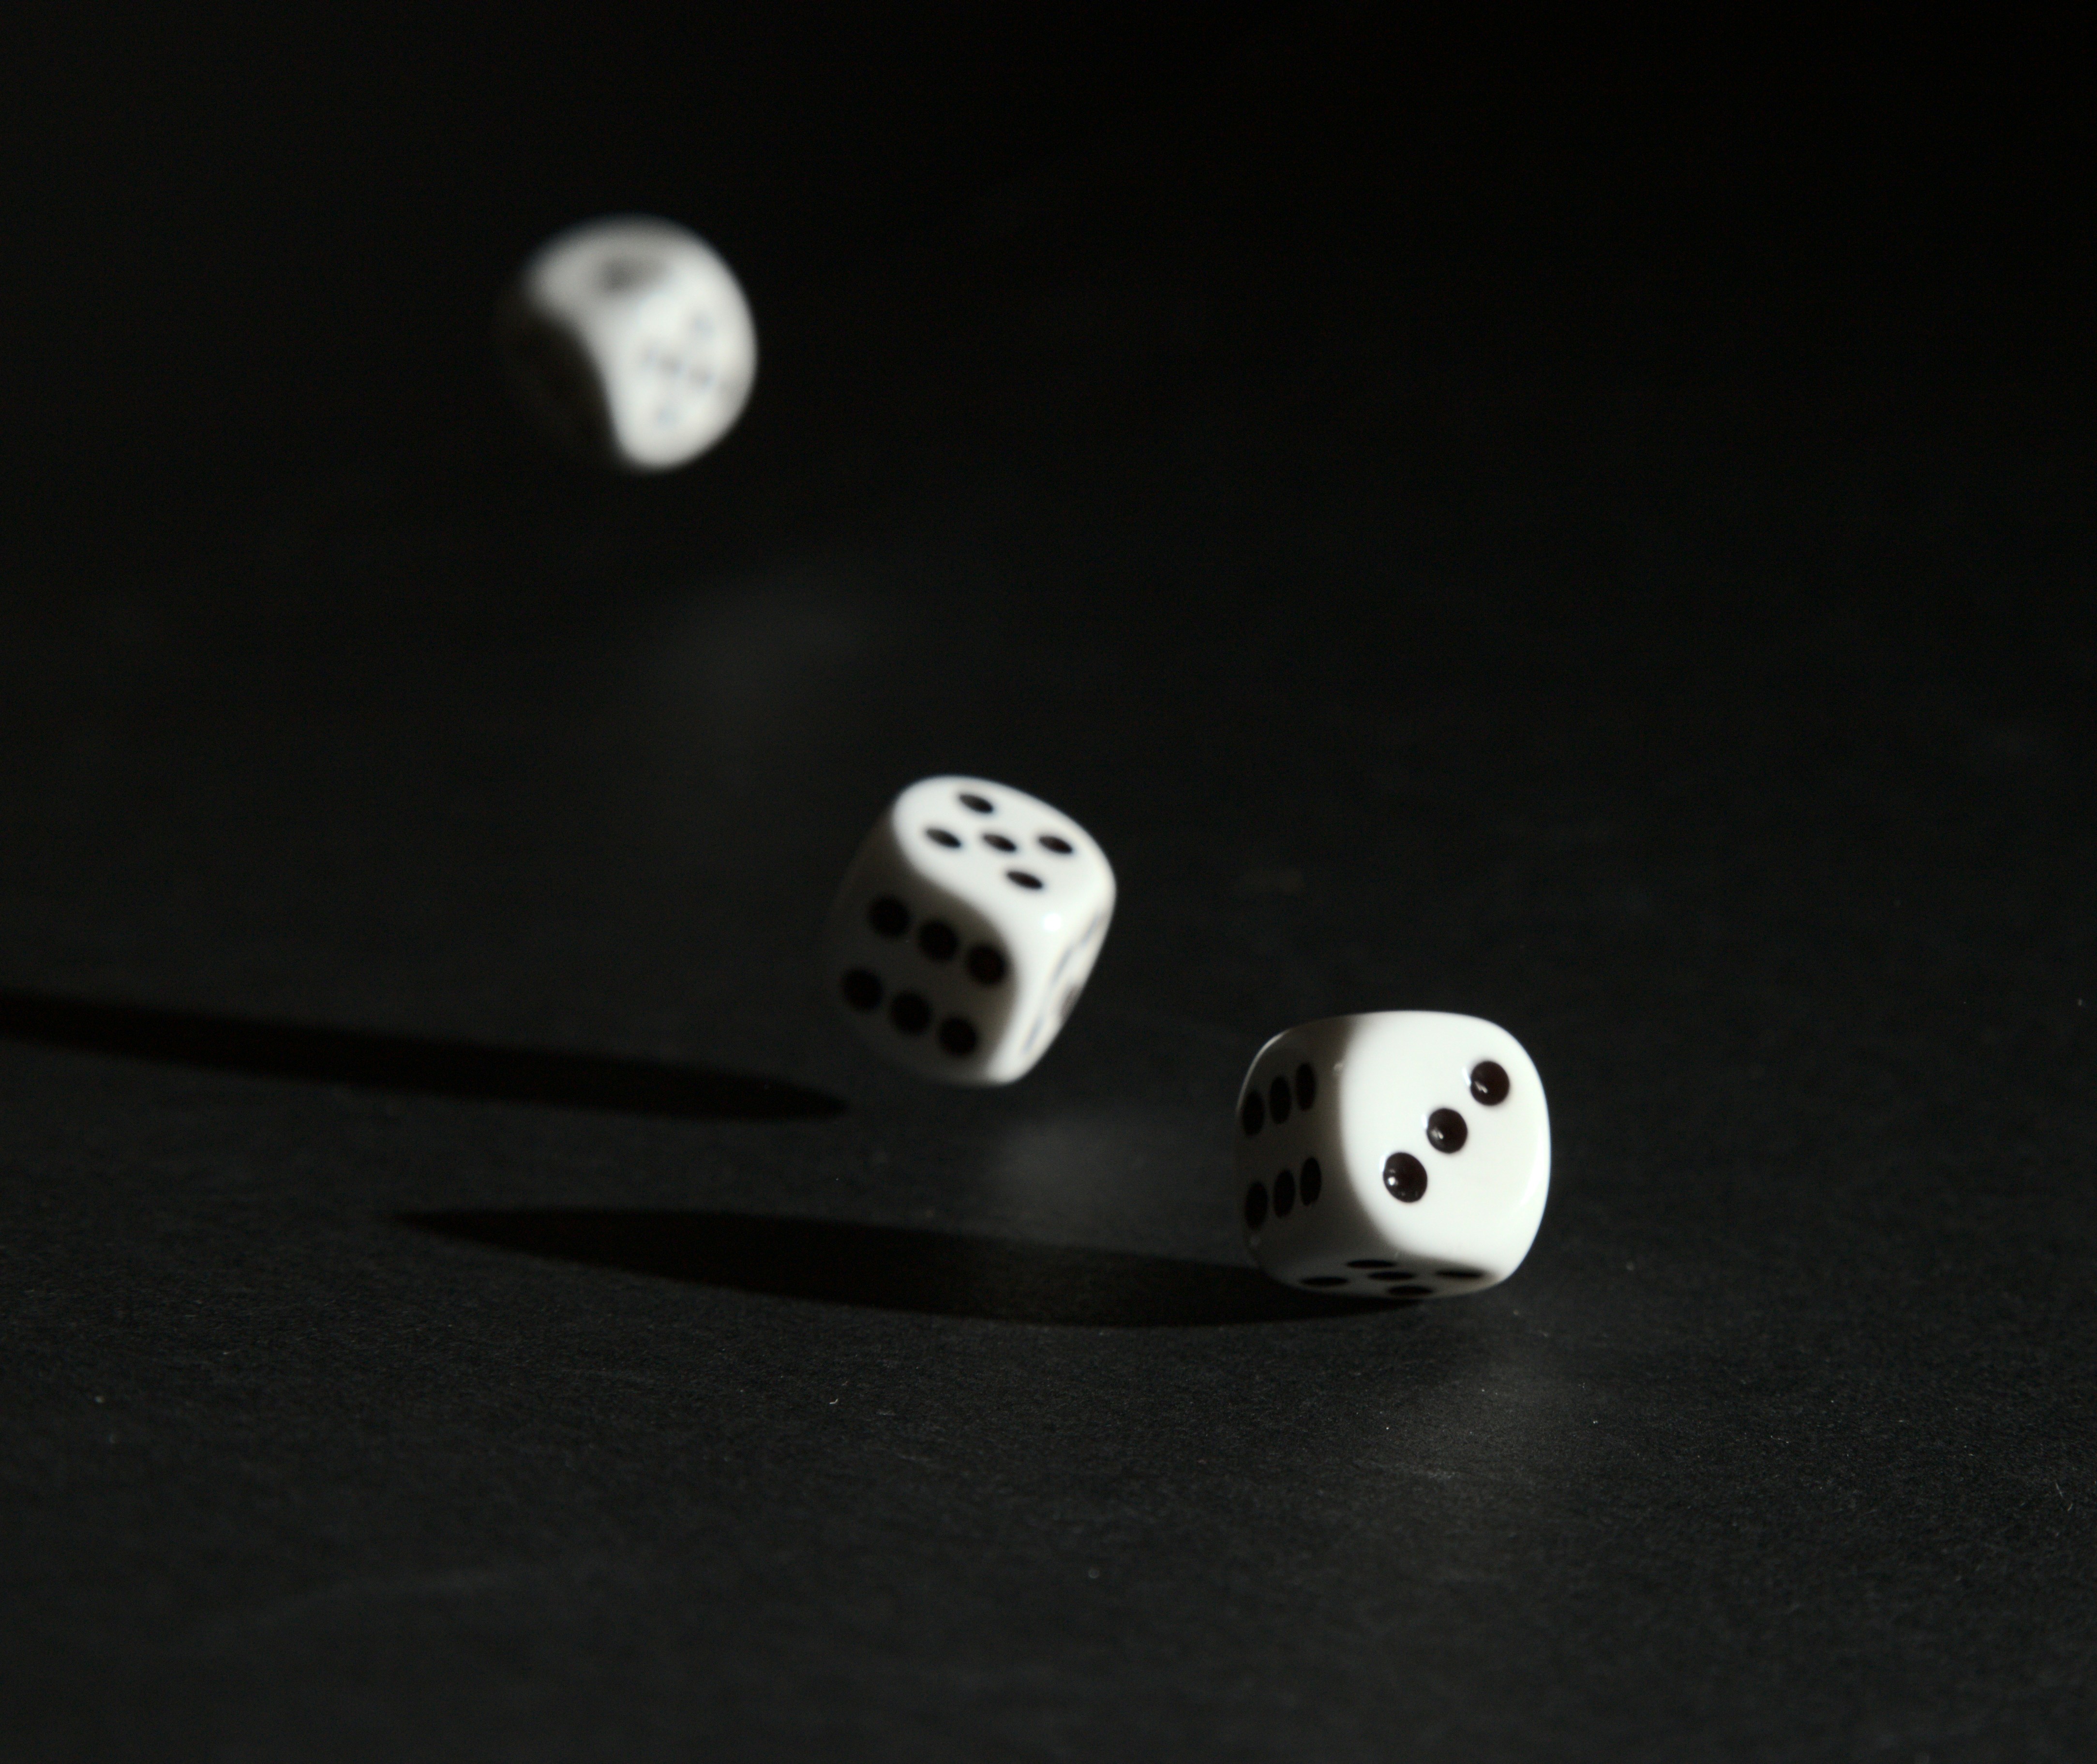 Three dice on a black background